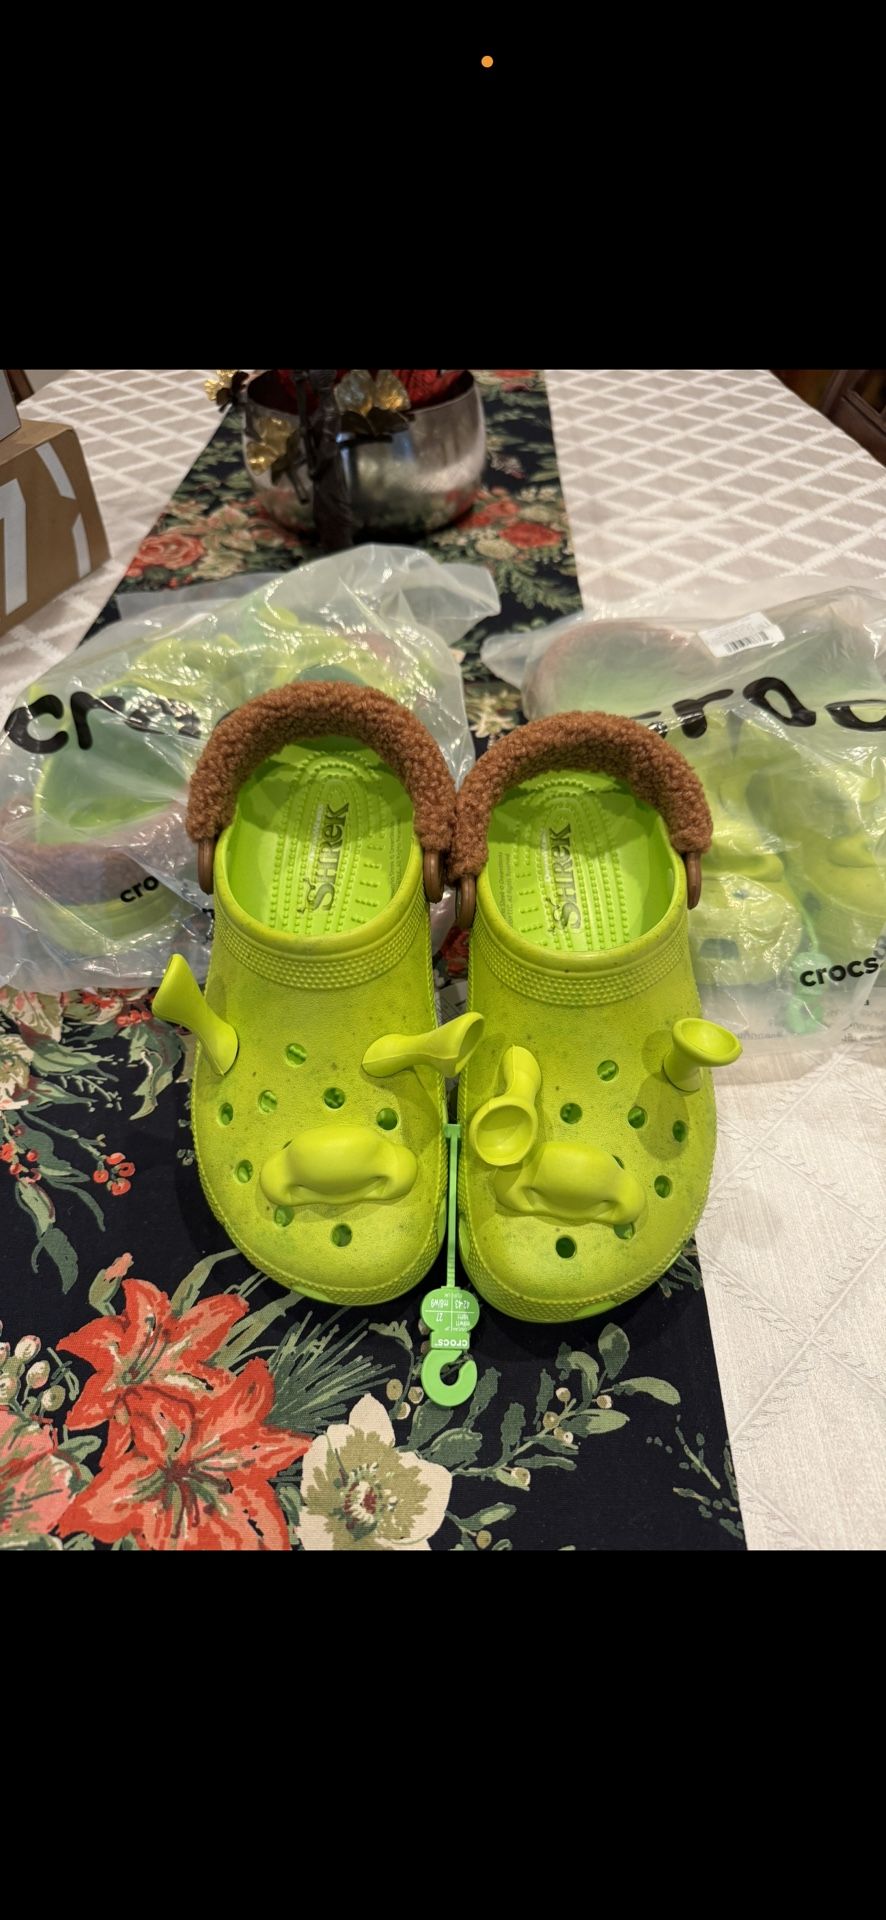 Shrek Crocs Size 10 BRAND NEW